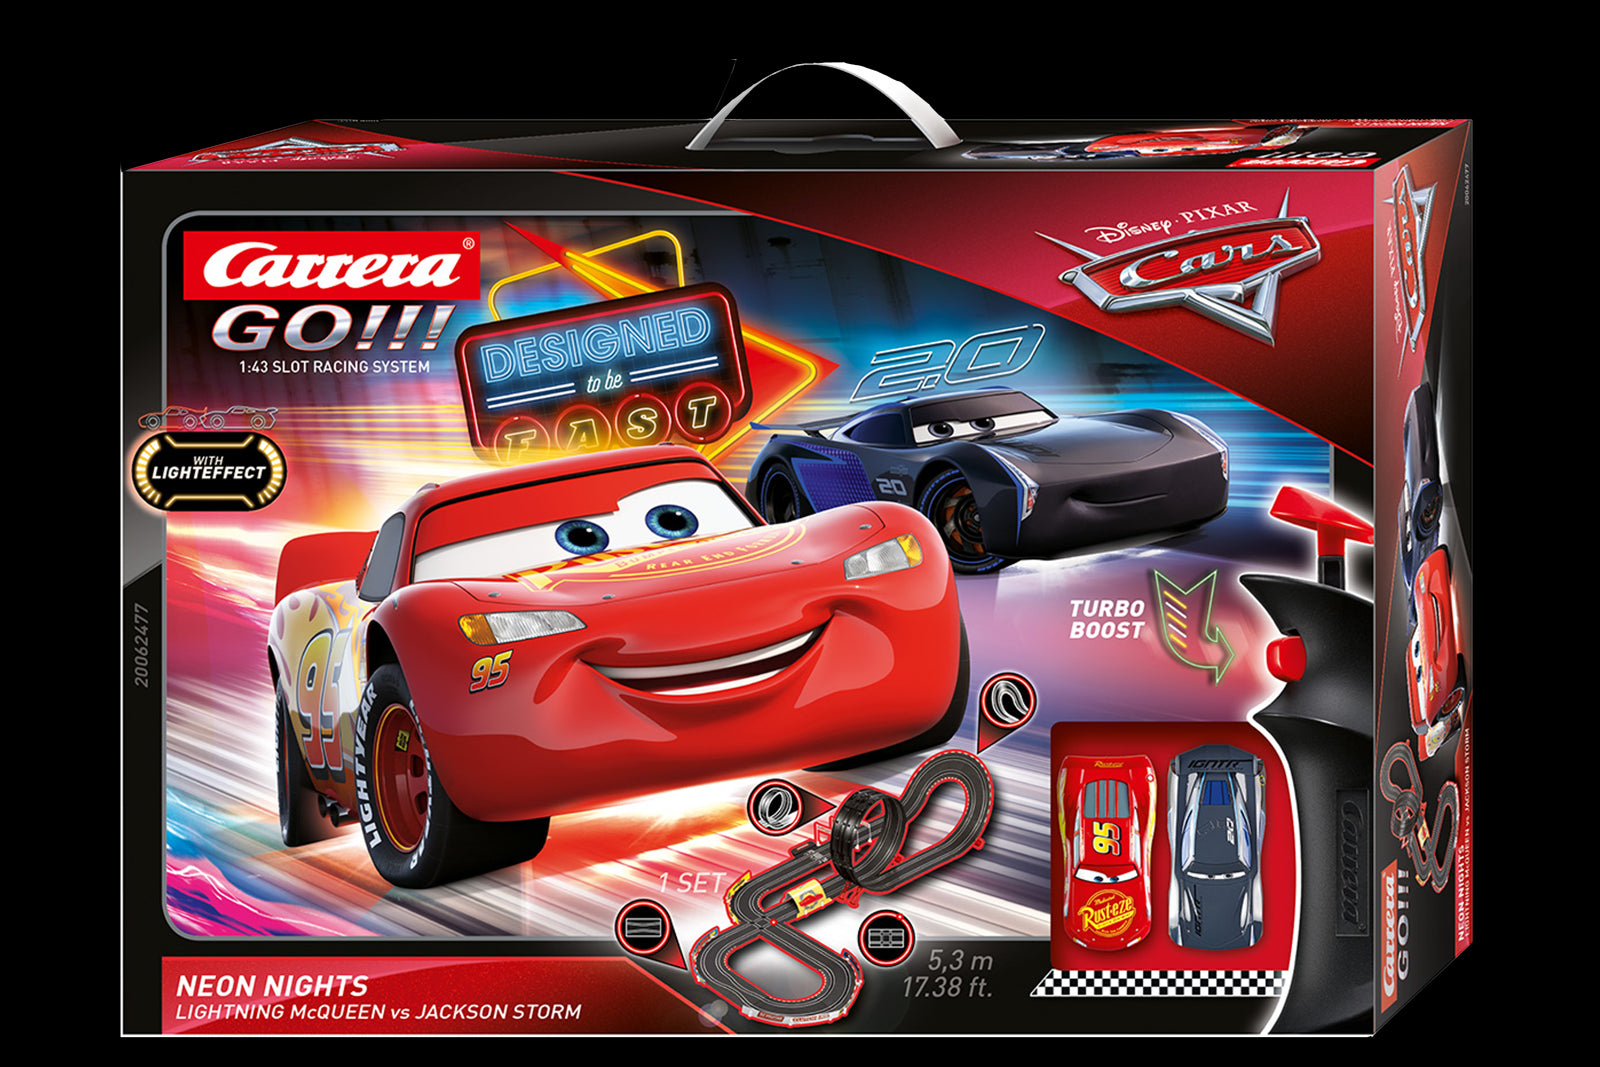 Carrera GO!!! 62518 Coffret Disney·Pixar Cars - Rocket Racer - Slot  Car-Union